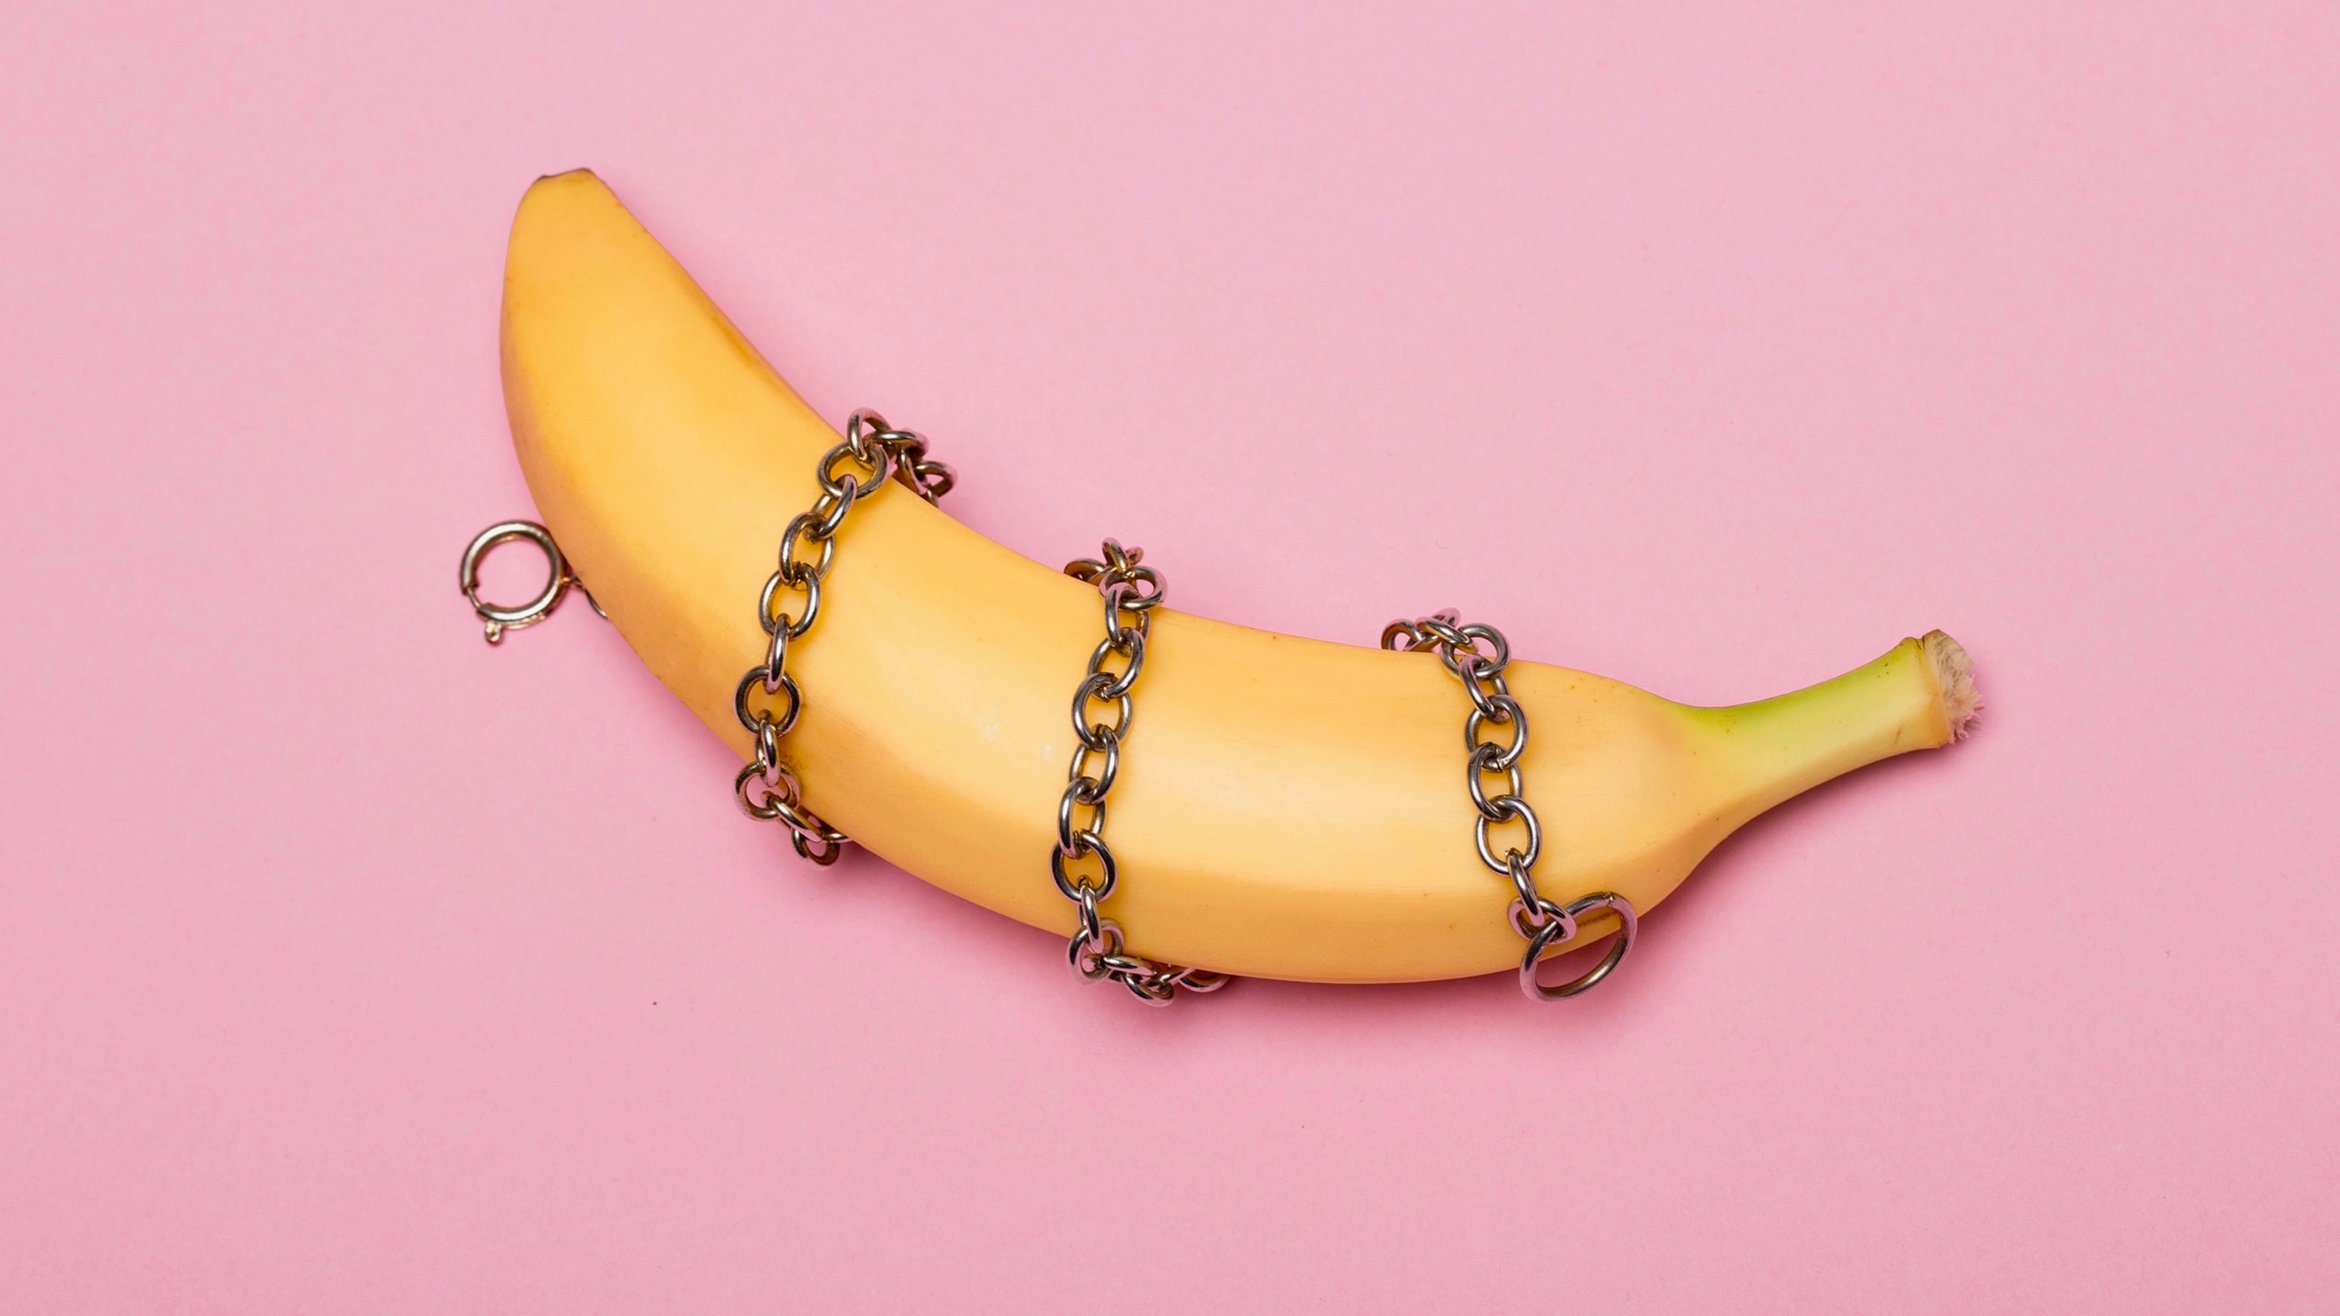 danielle trenholm recommends Banana Breast Tumblr